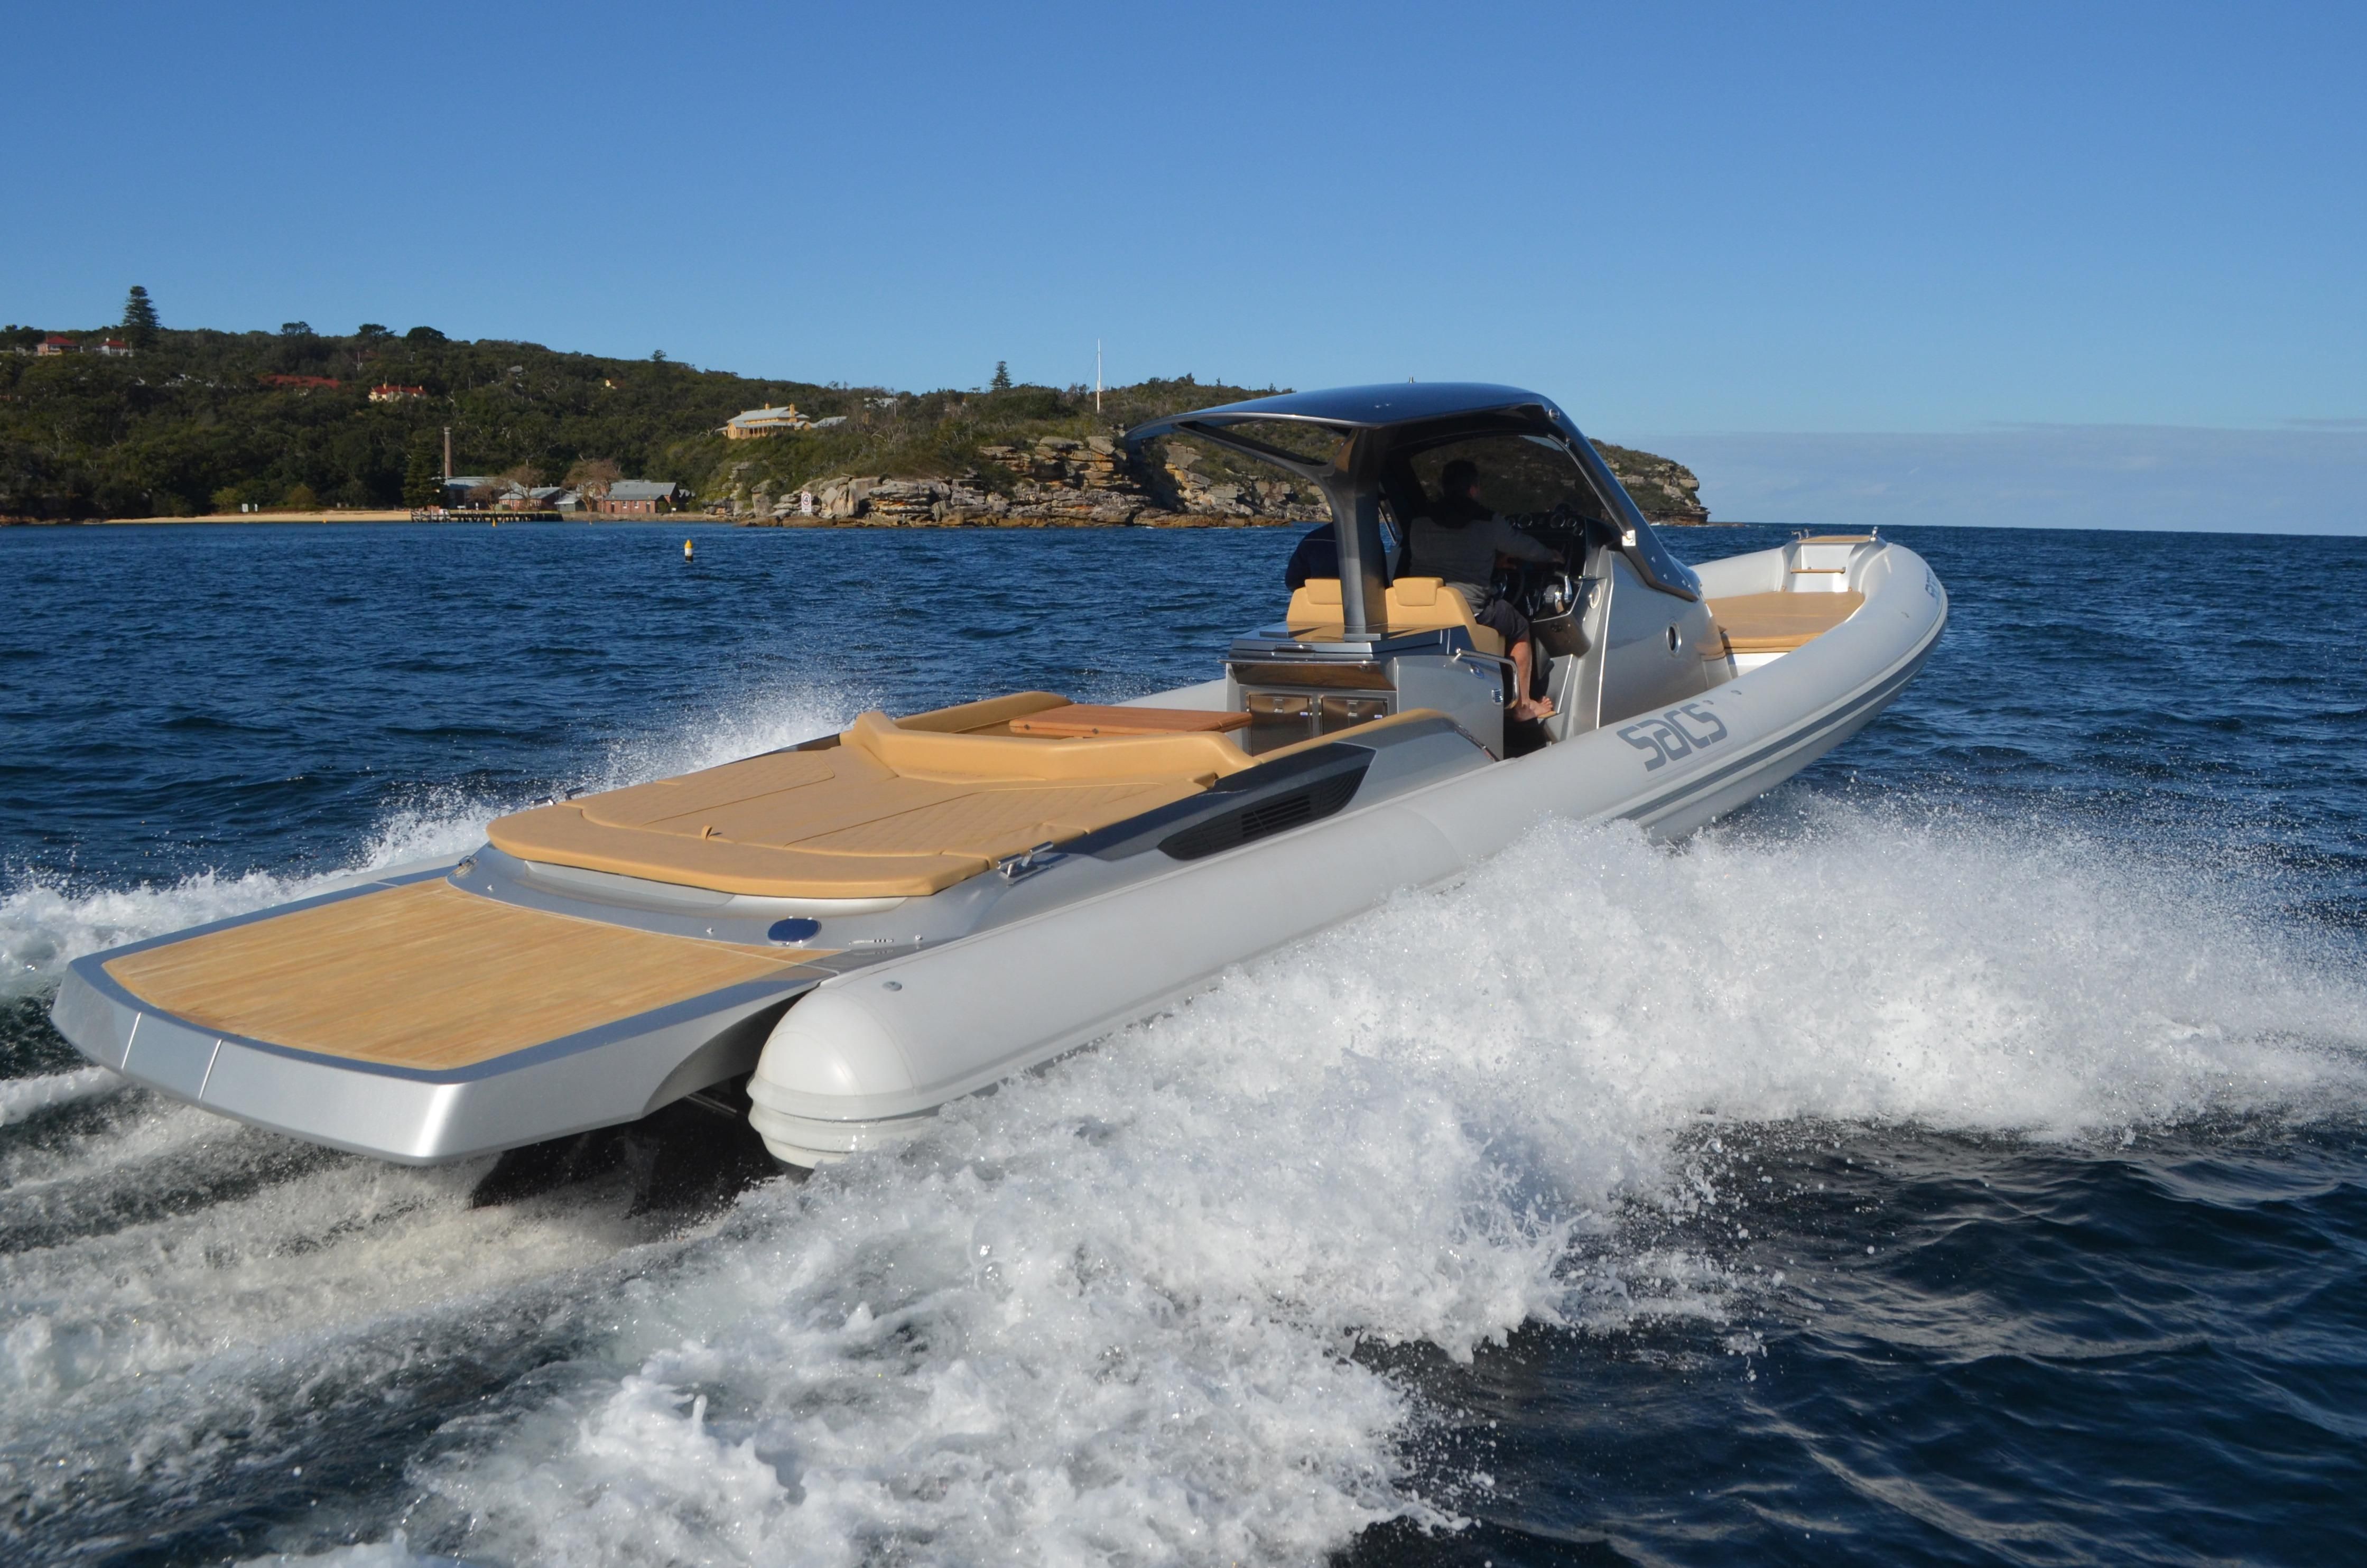 2019 Sacs Strider 13 Cruiser for sale - YachtWorld